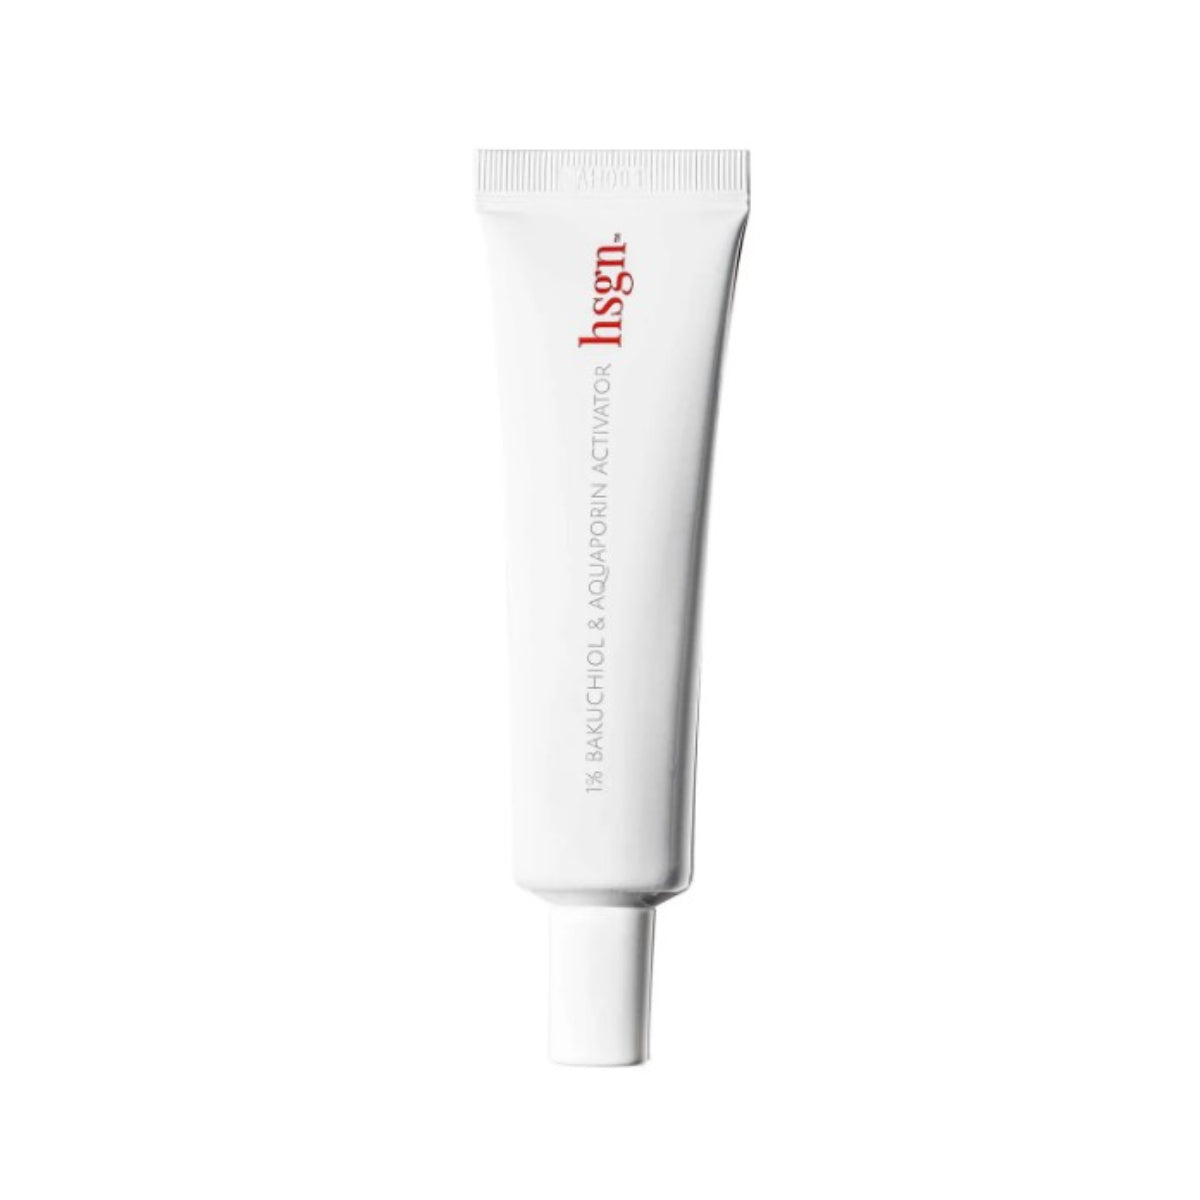 HSGN 1% Bakuchiol  Aquaporin Activator Eye Cream 30ml(1.01oz)/pack All-in-one / from Seoul, Korea